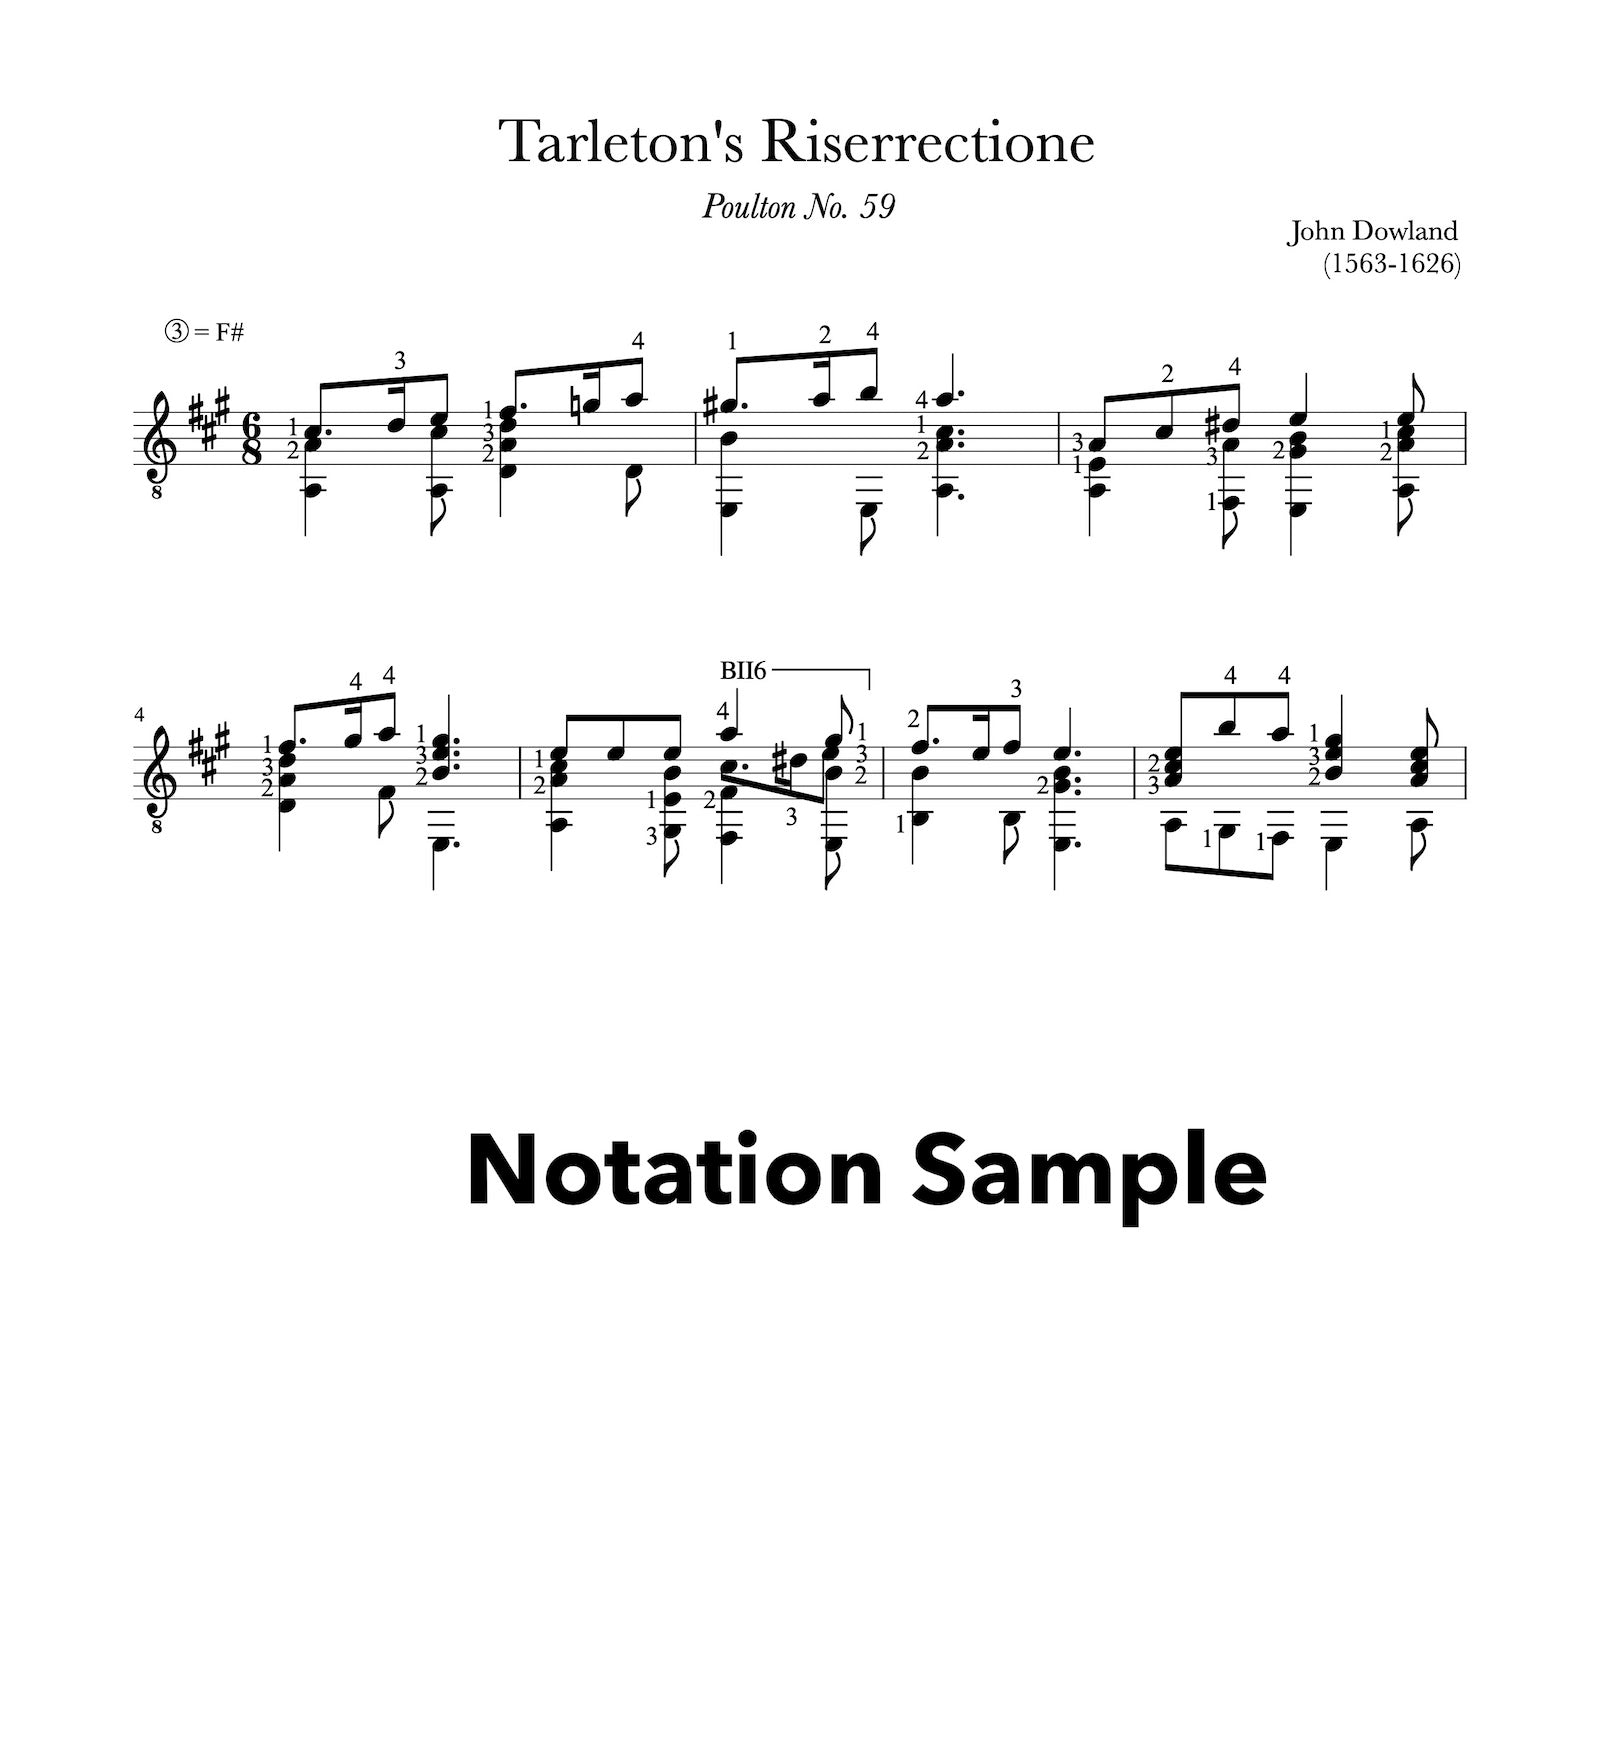 Tarleton's Riserrectione by Dowland (Notation Sample))